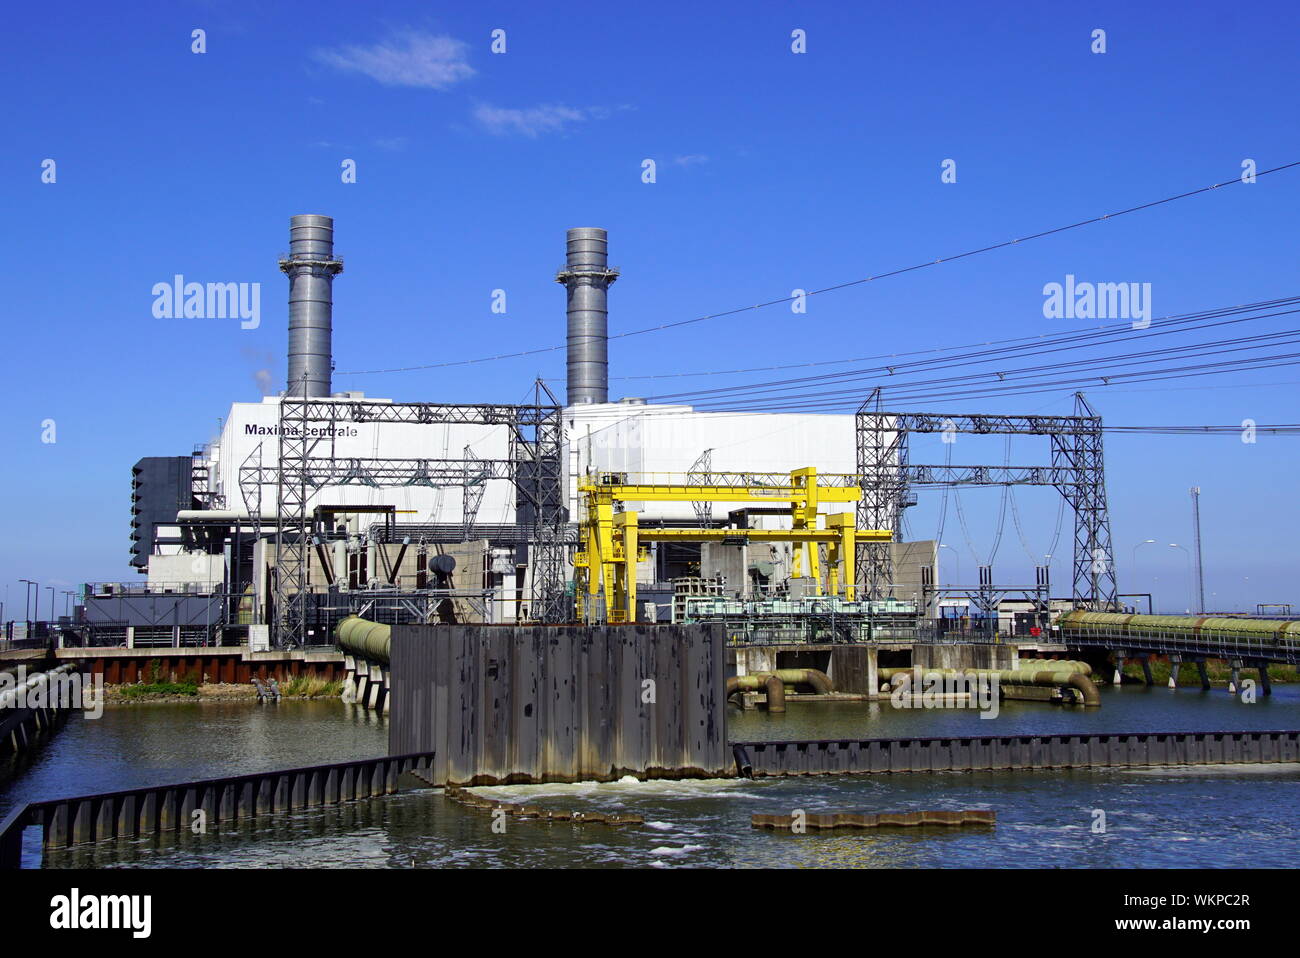 Lelystad, Flevoland, the Netherlands - May 4, 2018: Power Generating Station Maxima-centrale in the Dutch city of Lelystad. Stock Photo